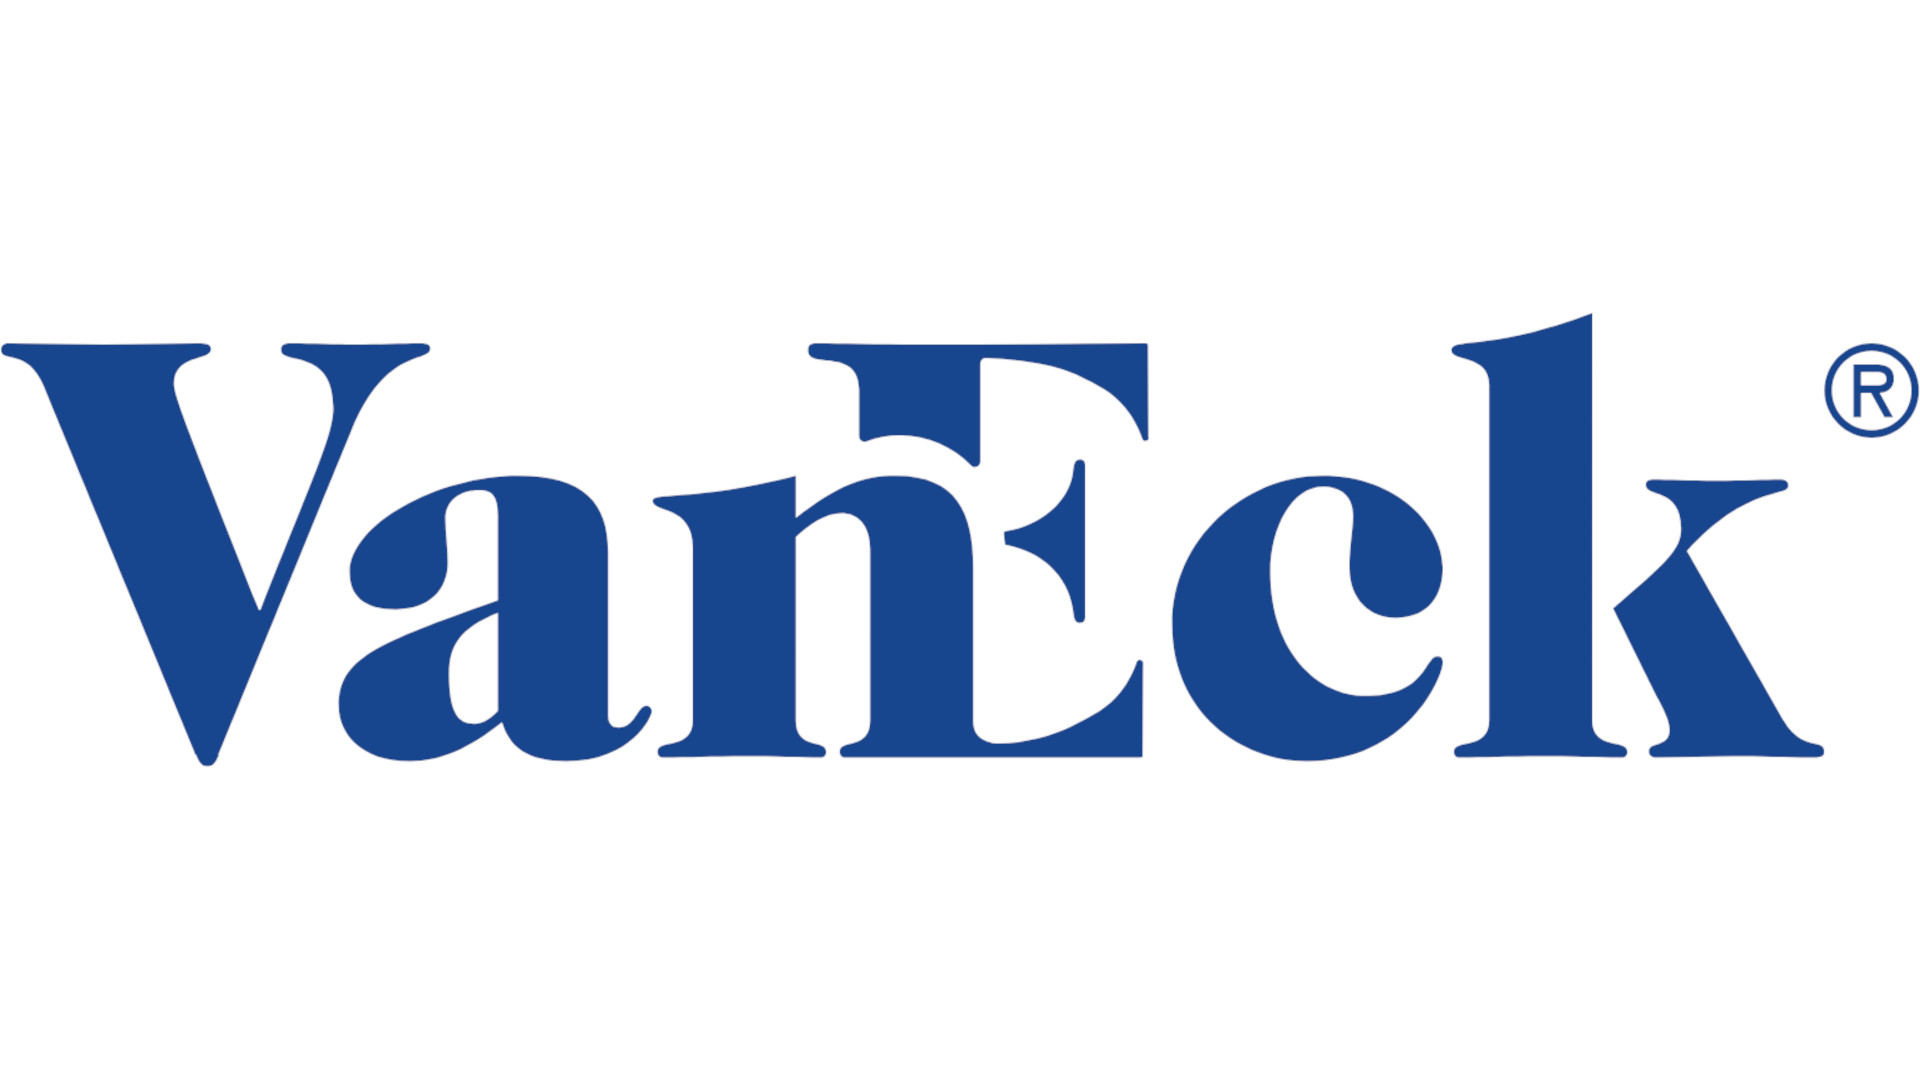 VanEck Logo